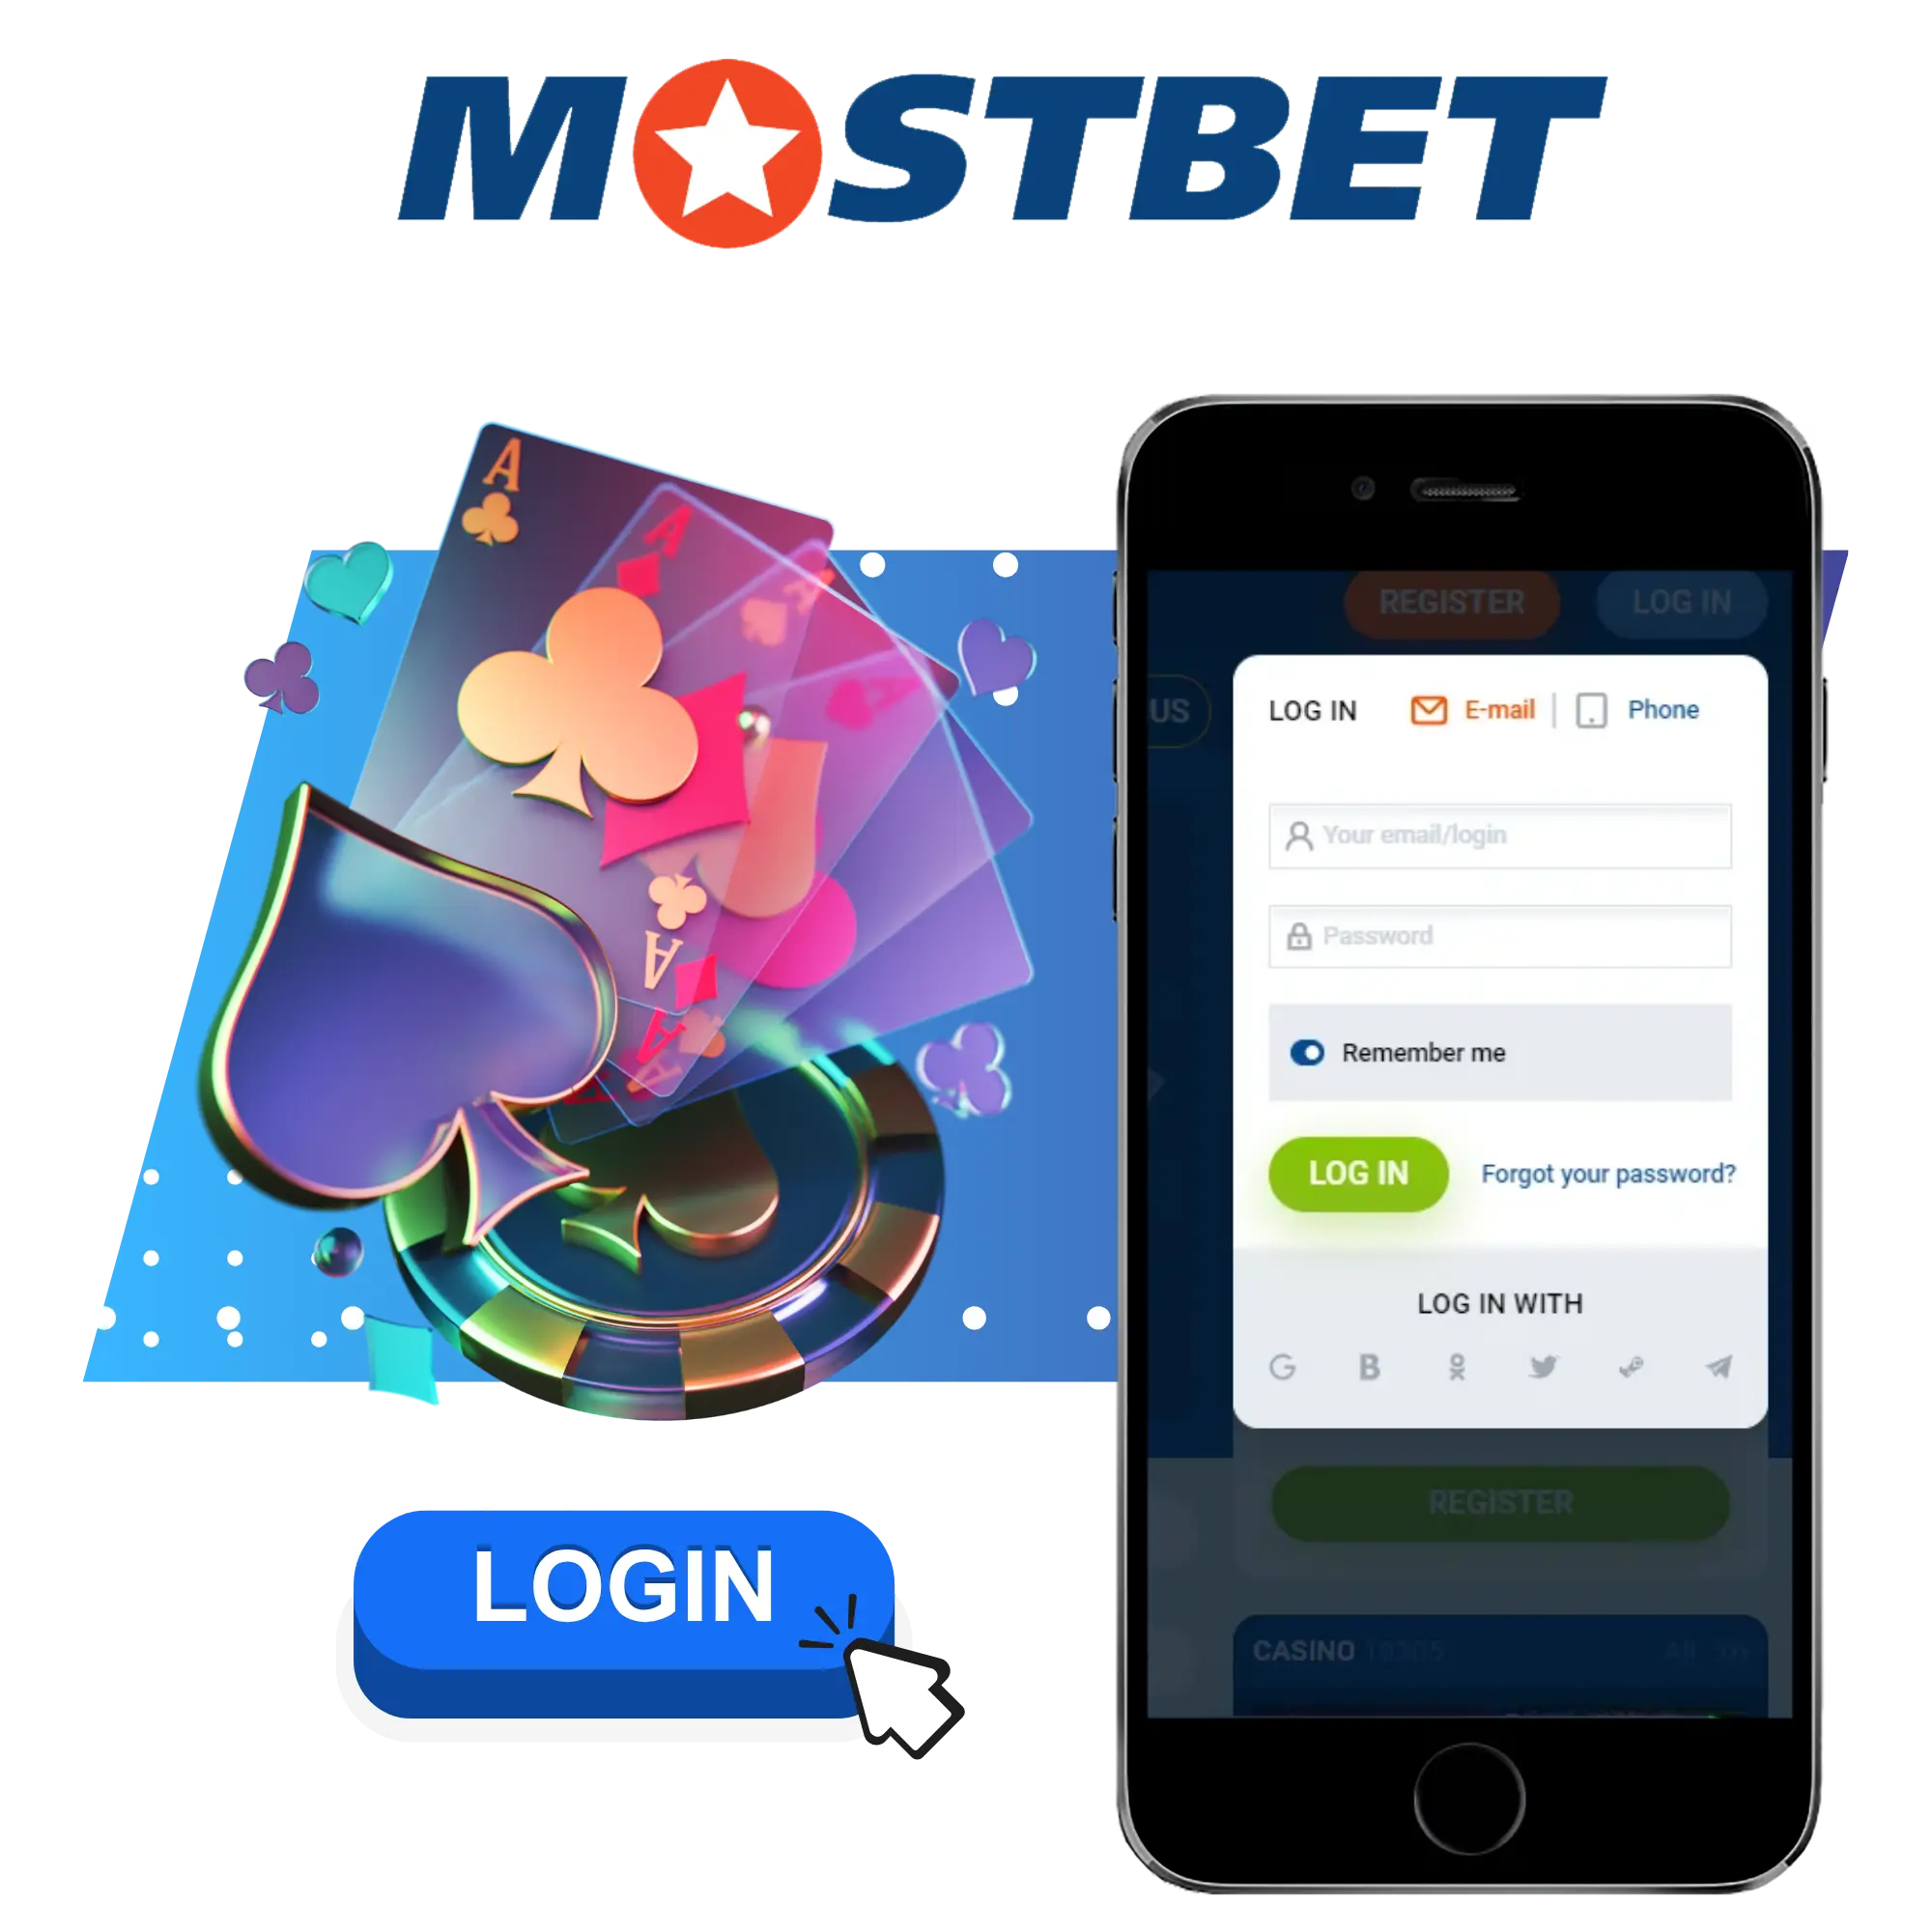 Secrets To Getting Mostbet KZ букмекерлік кеңсесі және онлайн казино To Complete Tasks Quickly And Efficiently